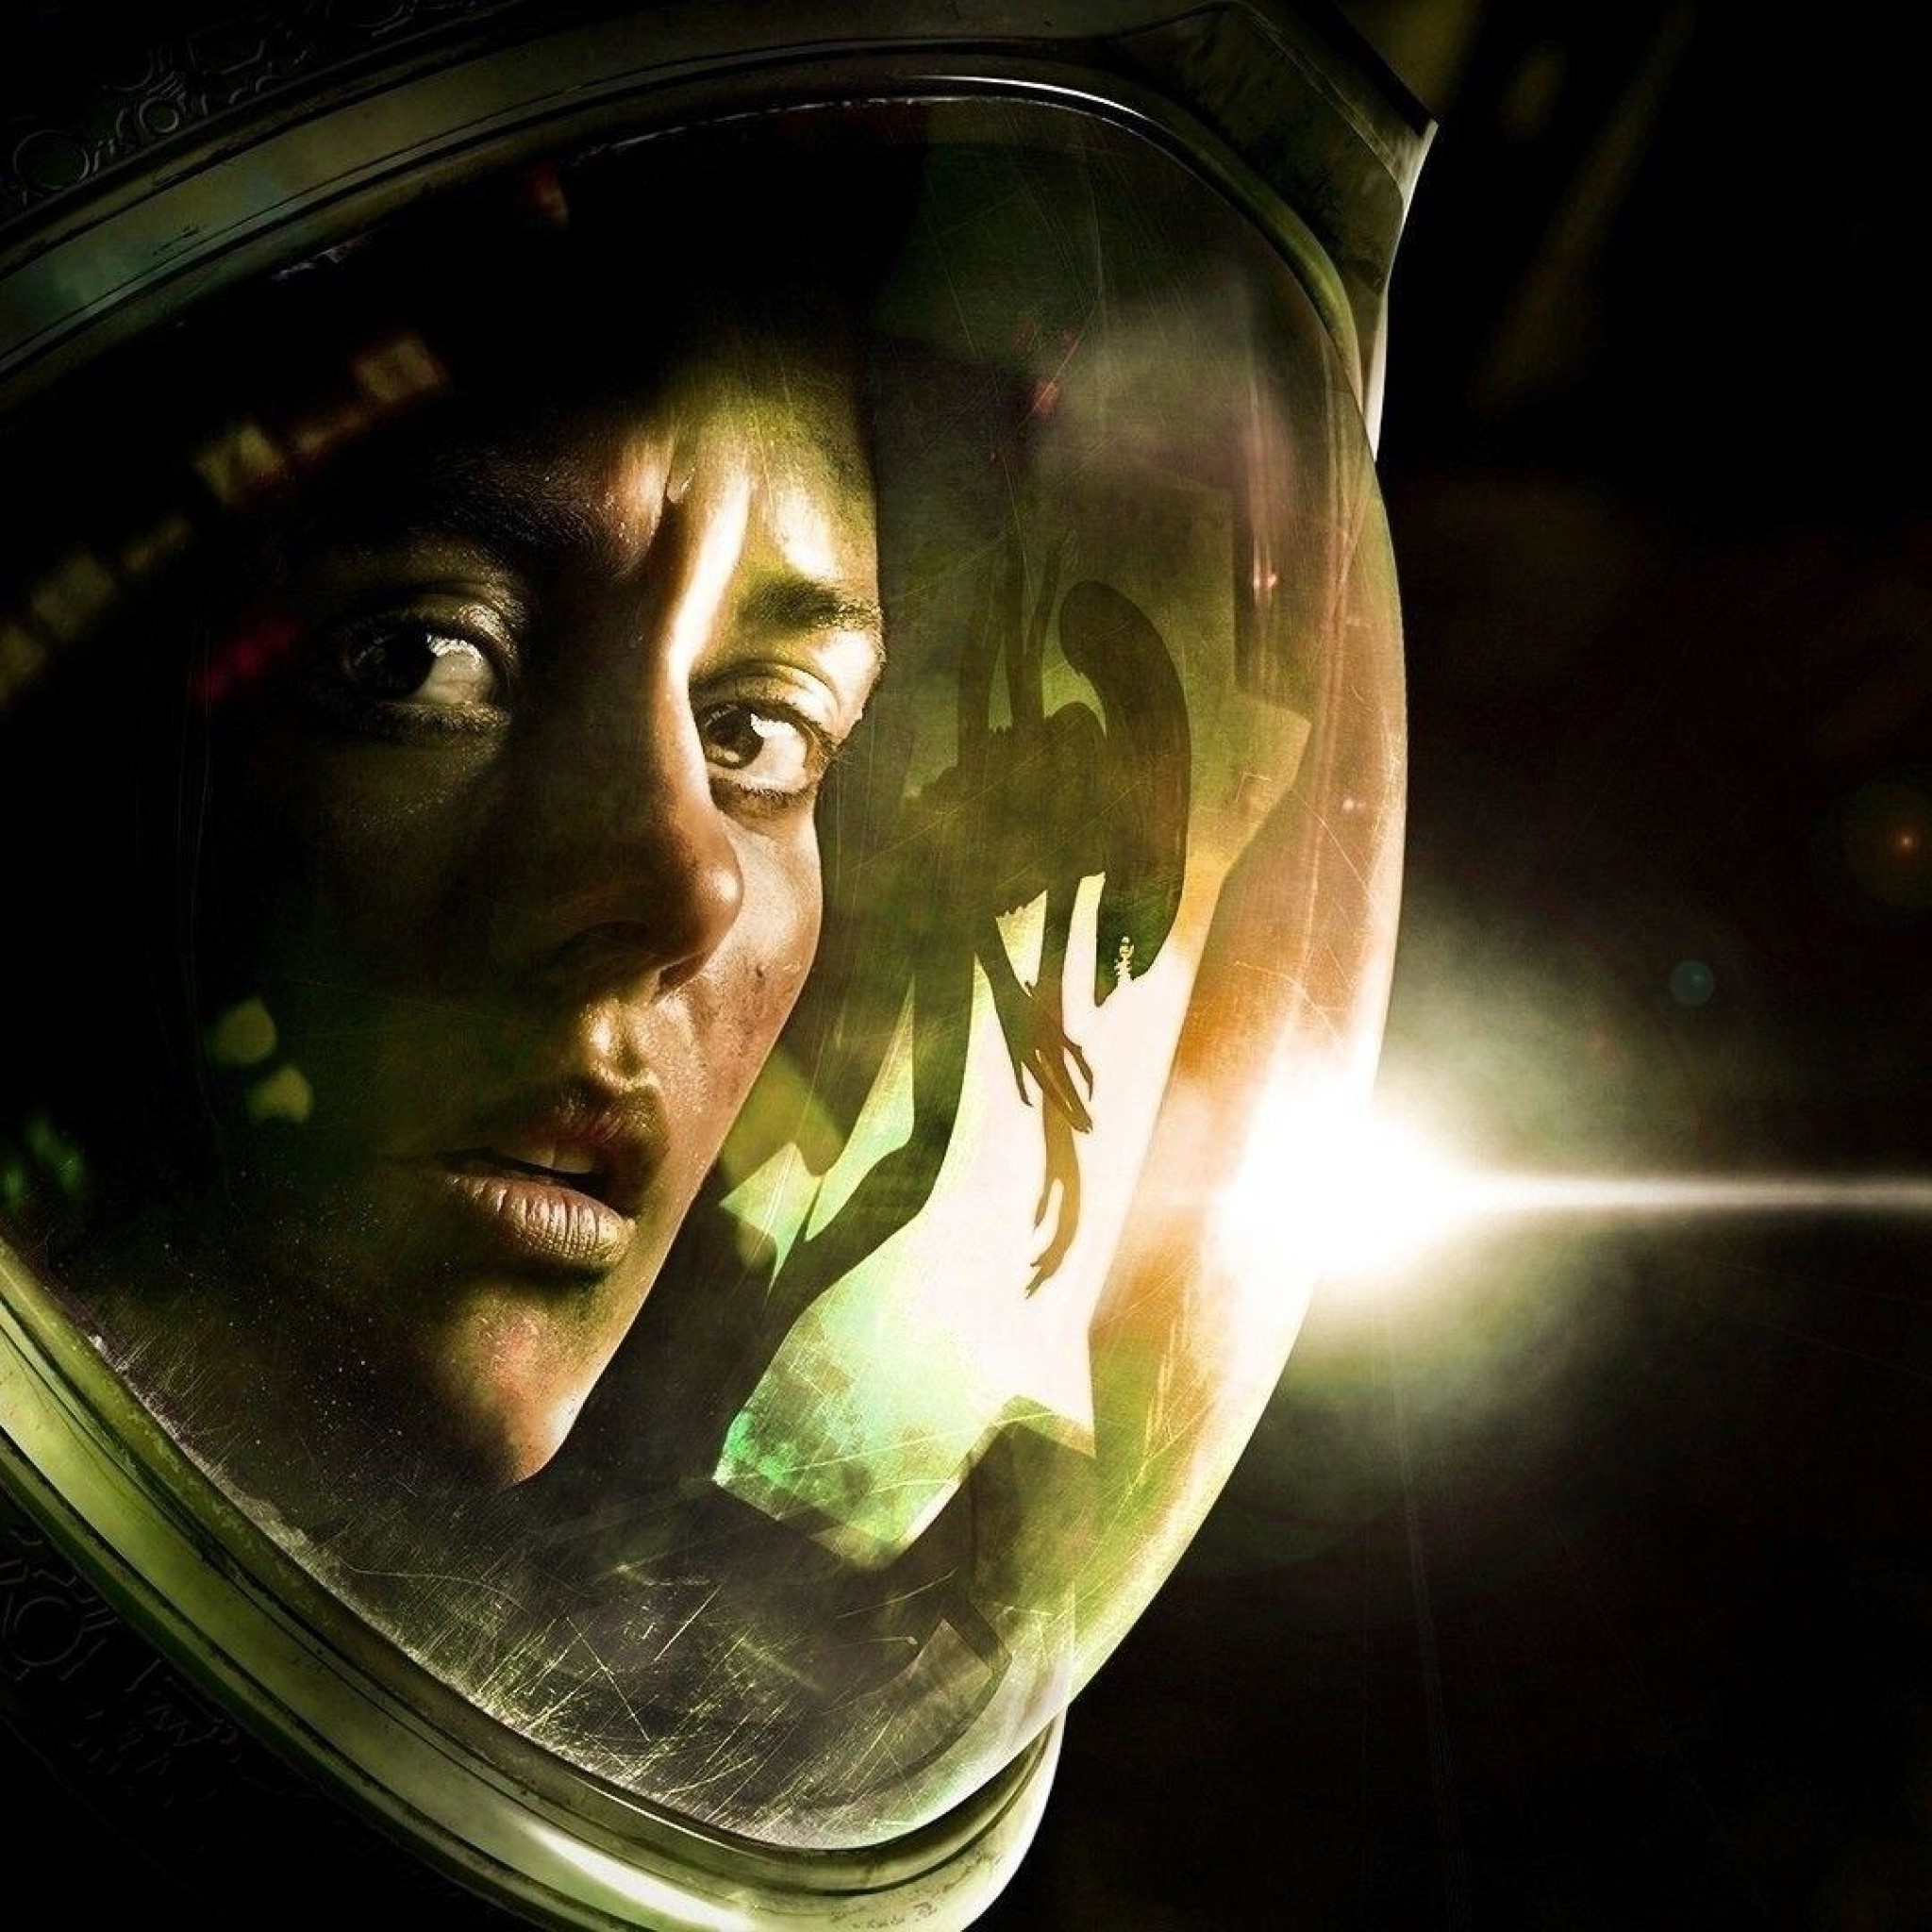 Alien: Isolation Pack 320 games for Steam Deck